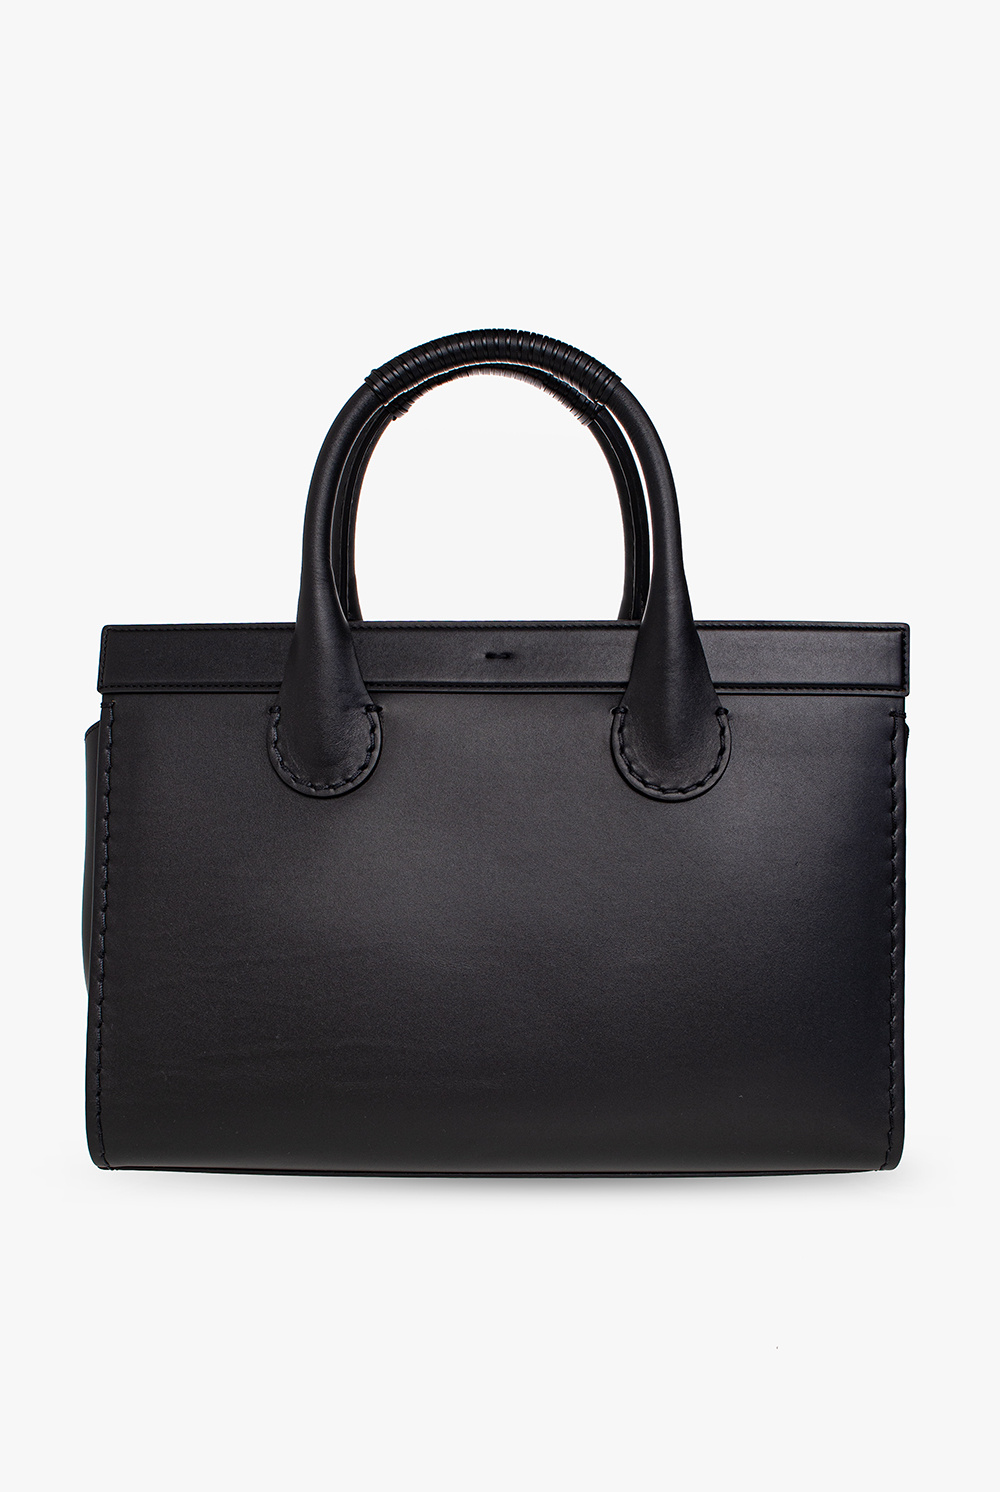 Chloé ‘Edith Large’ shopper bag